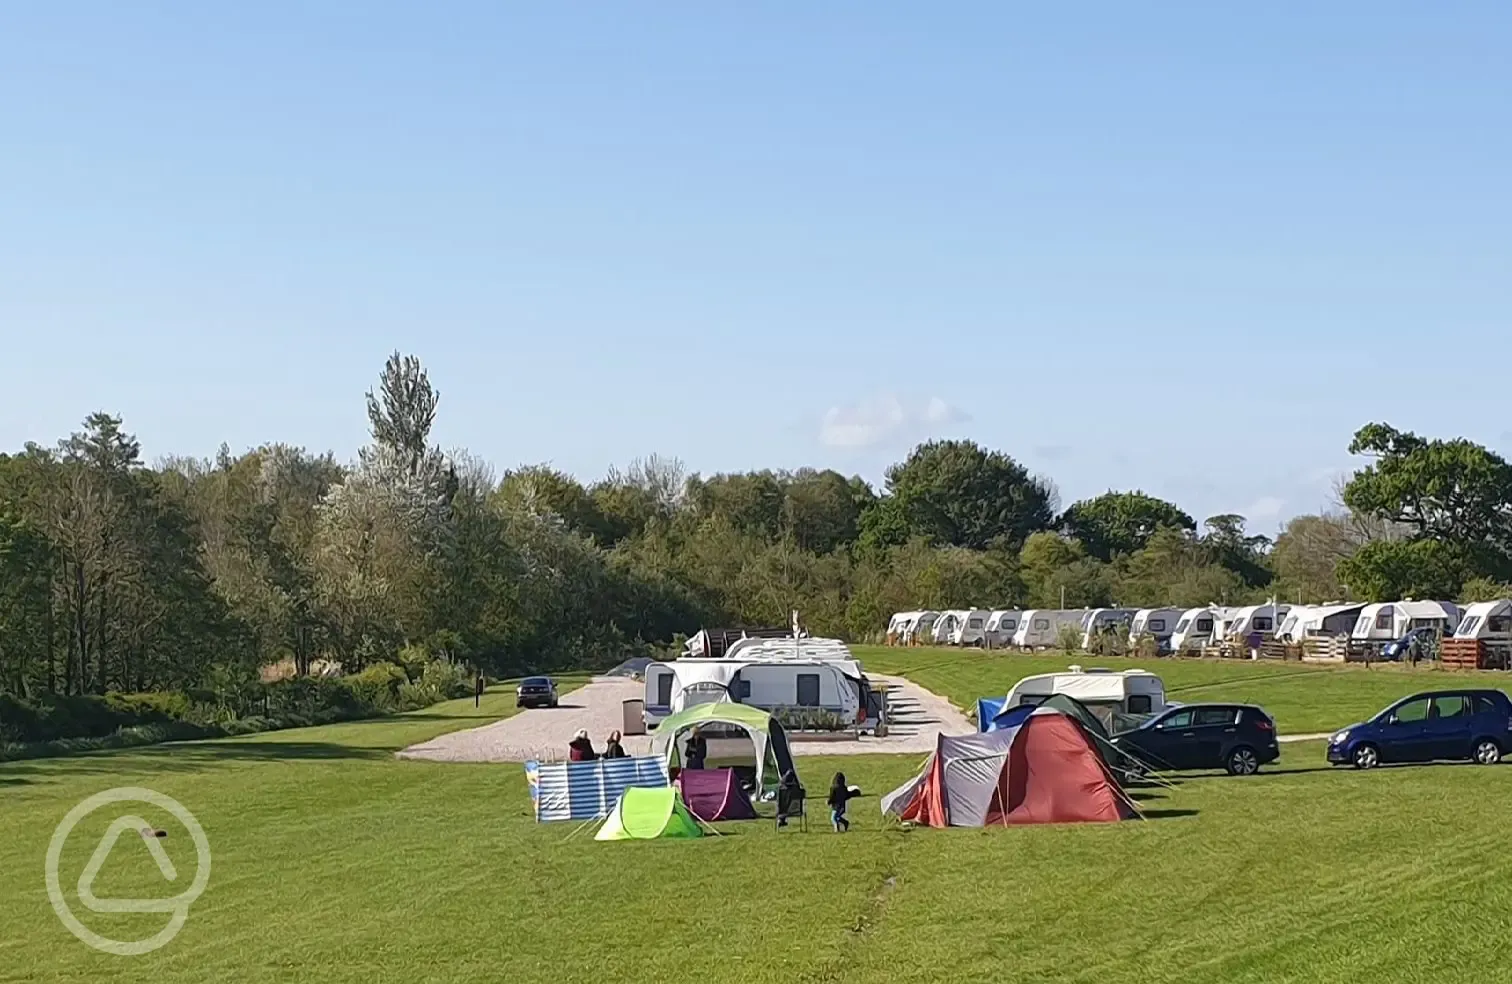 Main camping field at Wyreside